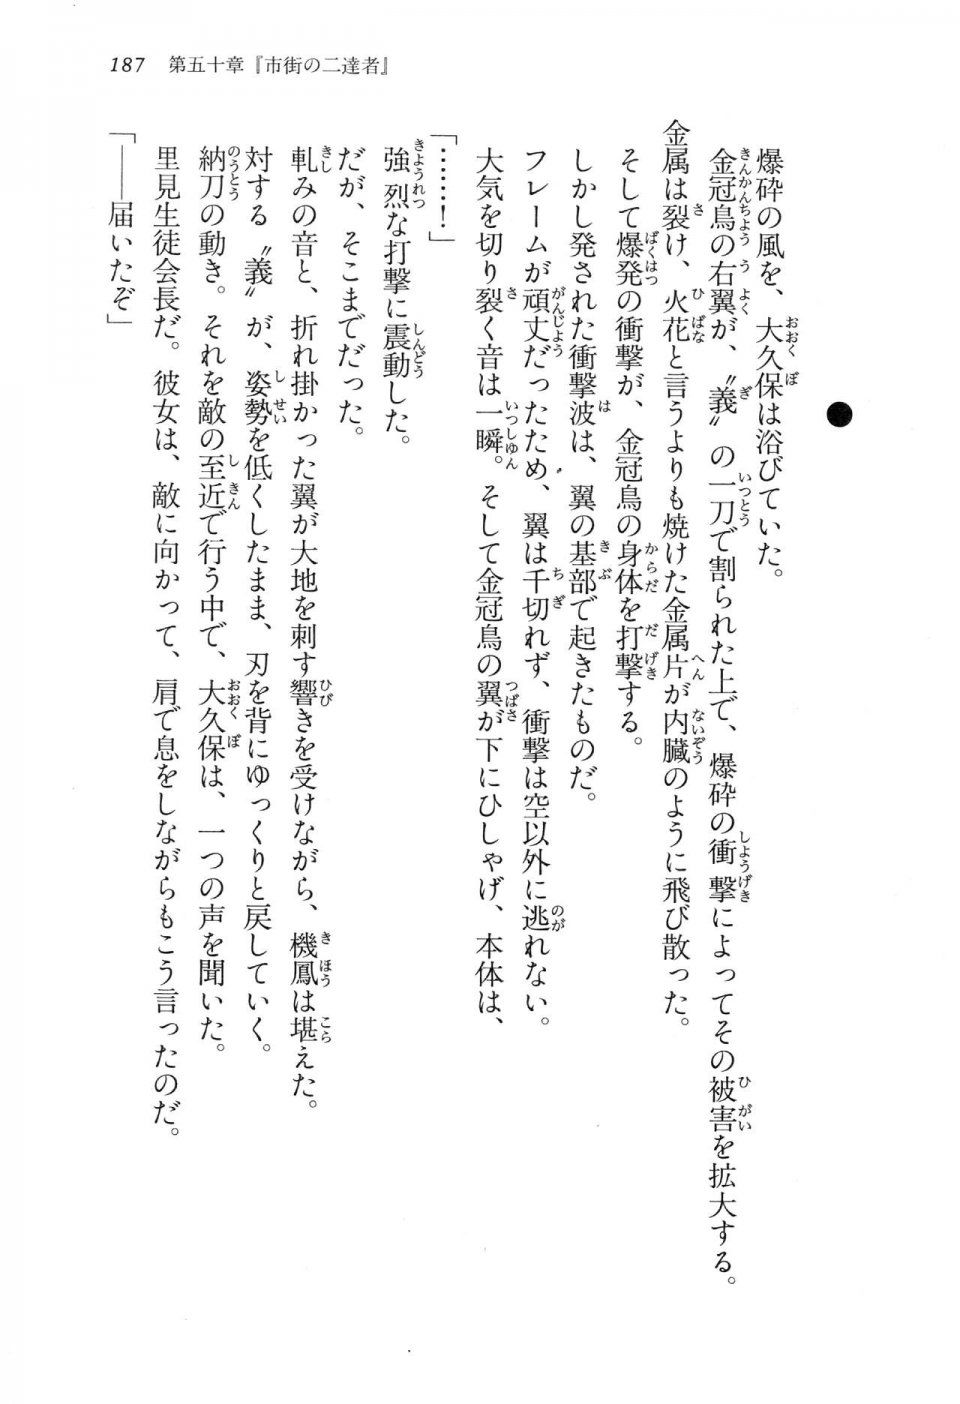 Kyoukai Senjou no Horizon LN Vol 15(6C) Part 1 - Photo #187